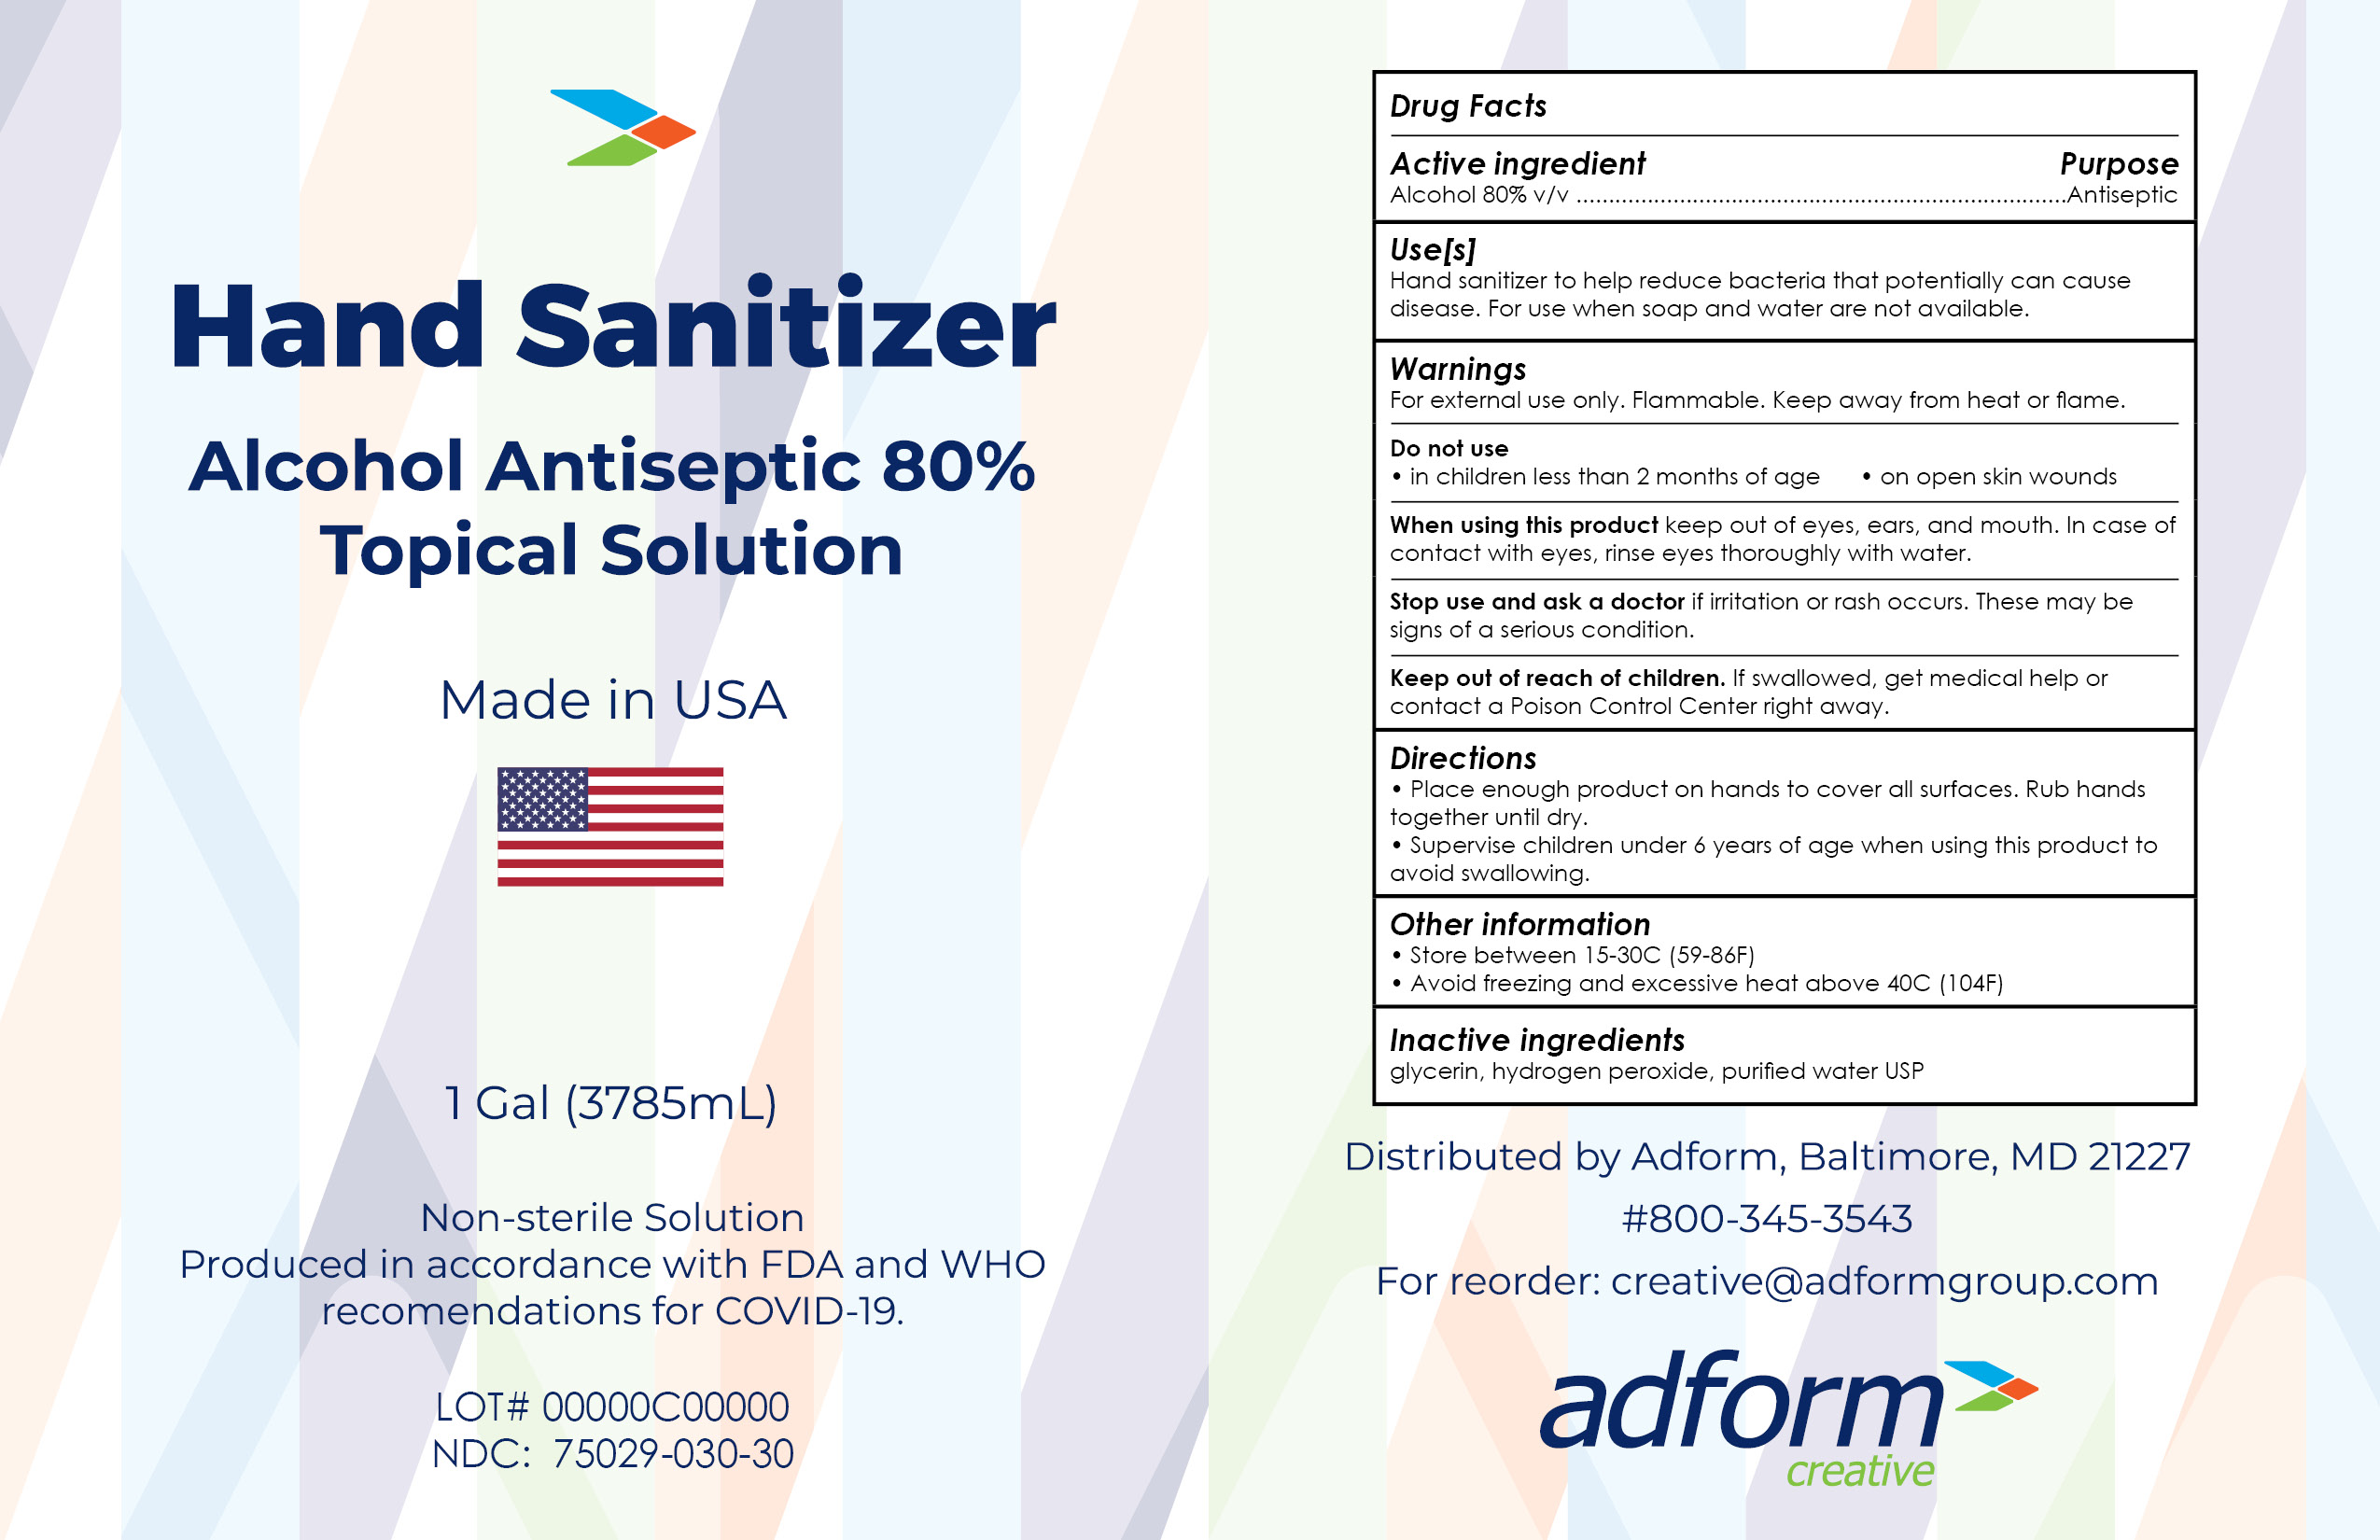 Adform - Hand Sanitizer Label